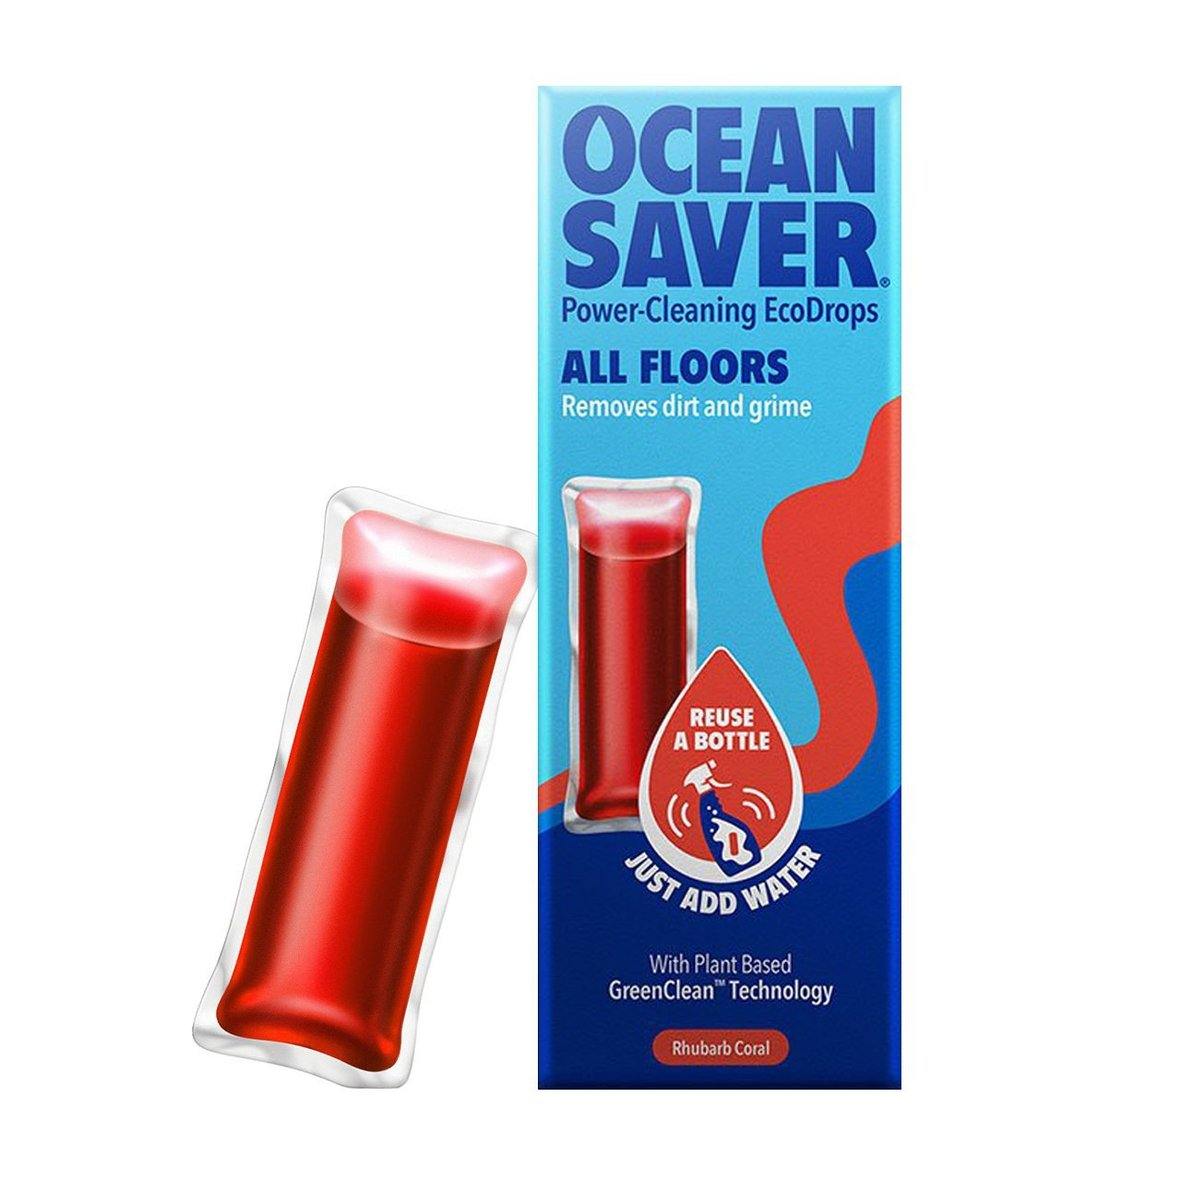 Ocean Saver Refill Alll Purpose Floor Rhubard Coral with box